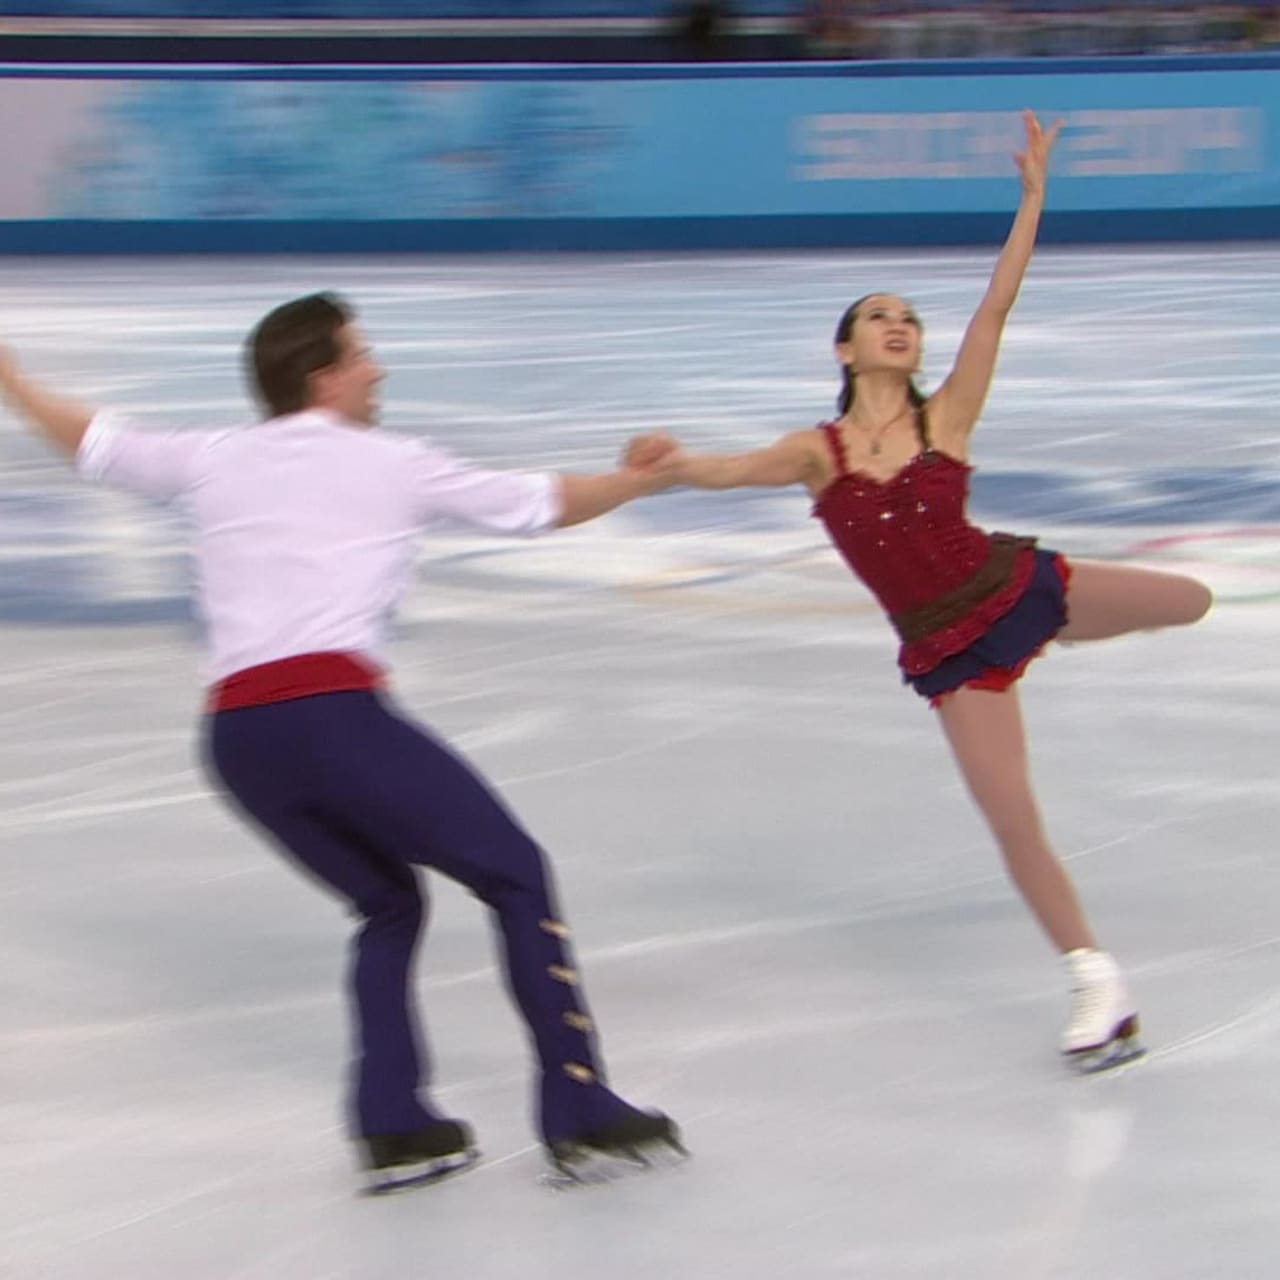 Pairs free program - Figure Skating | Sochi 2014 Replays